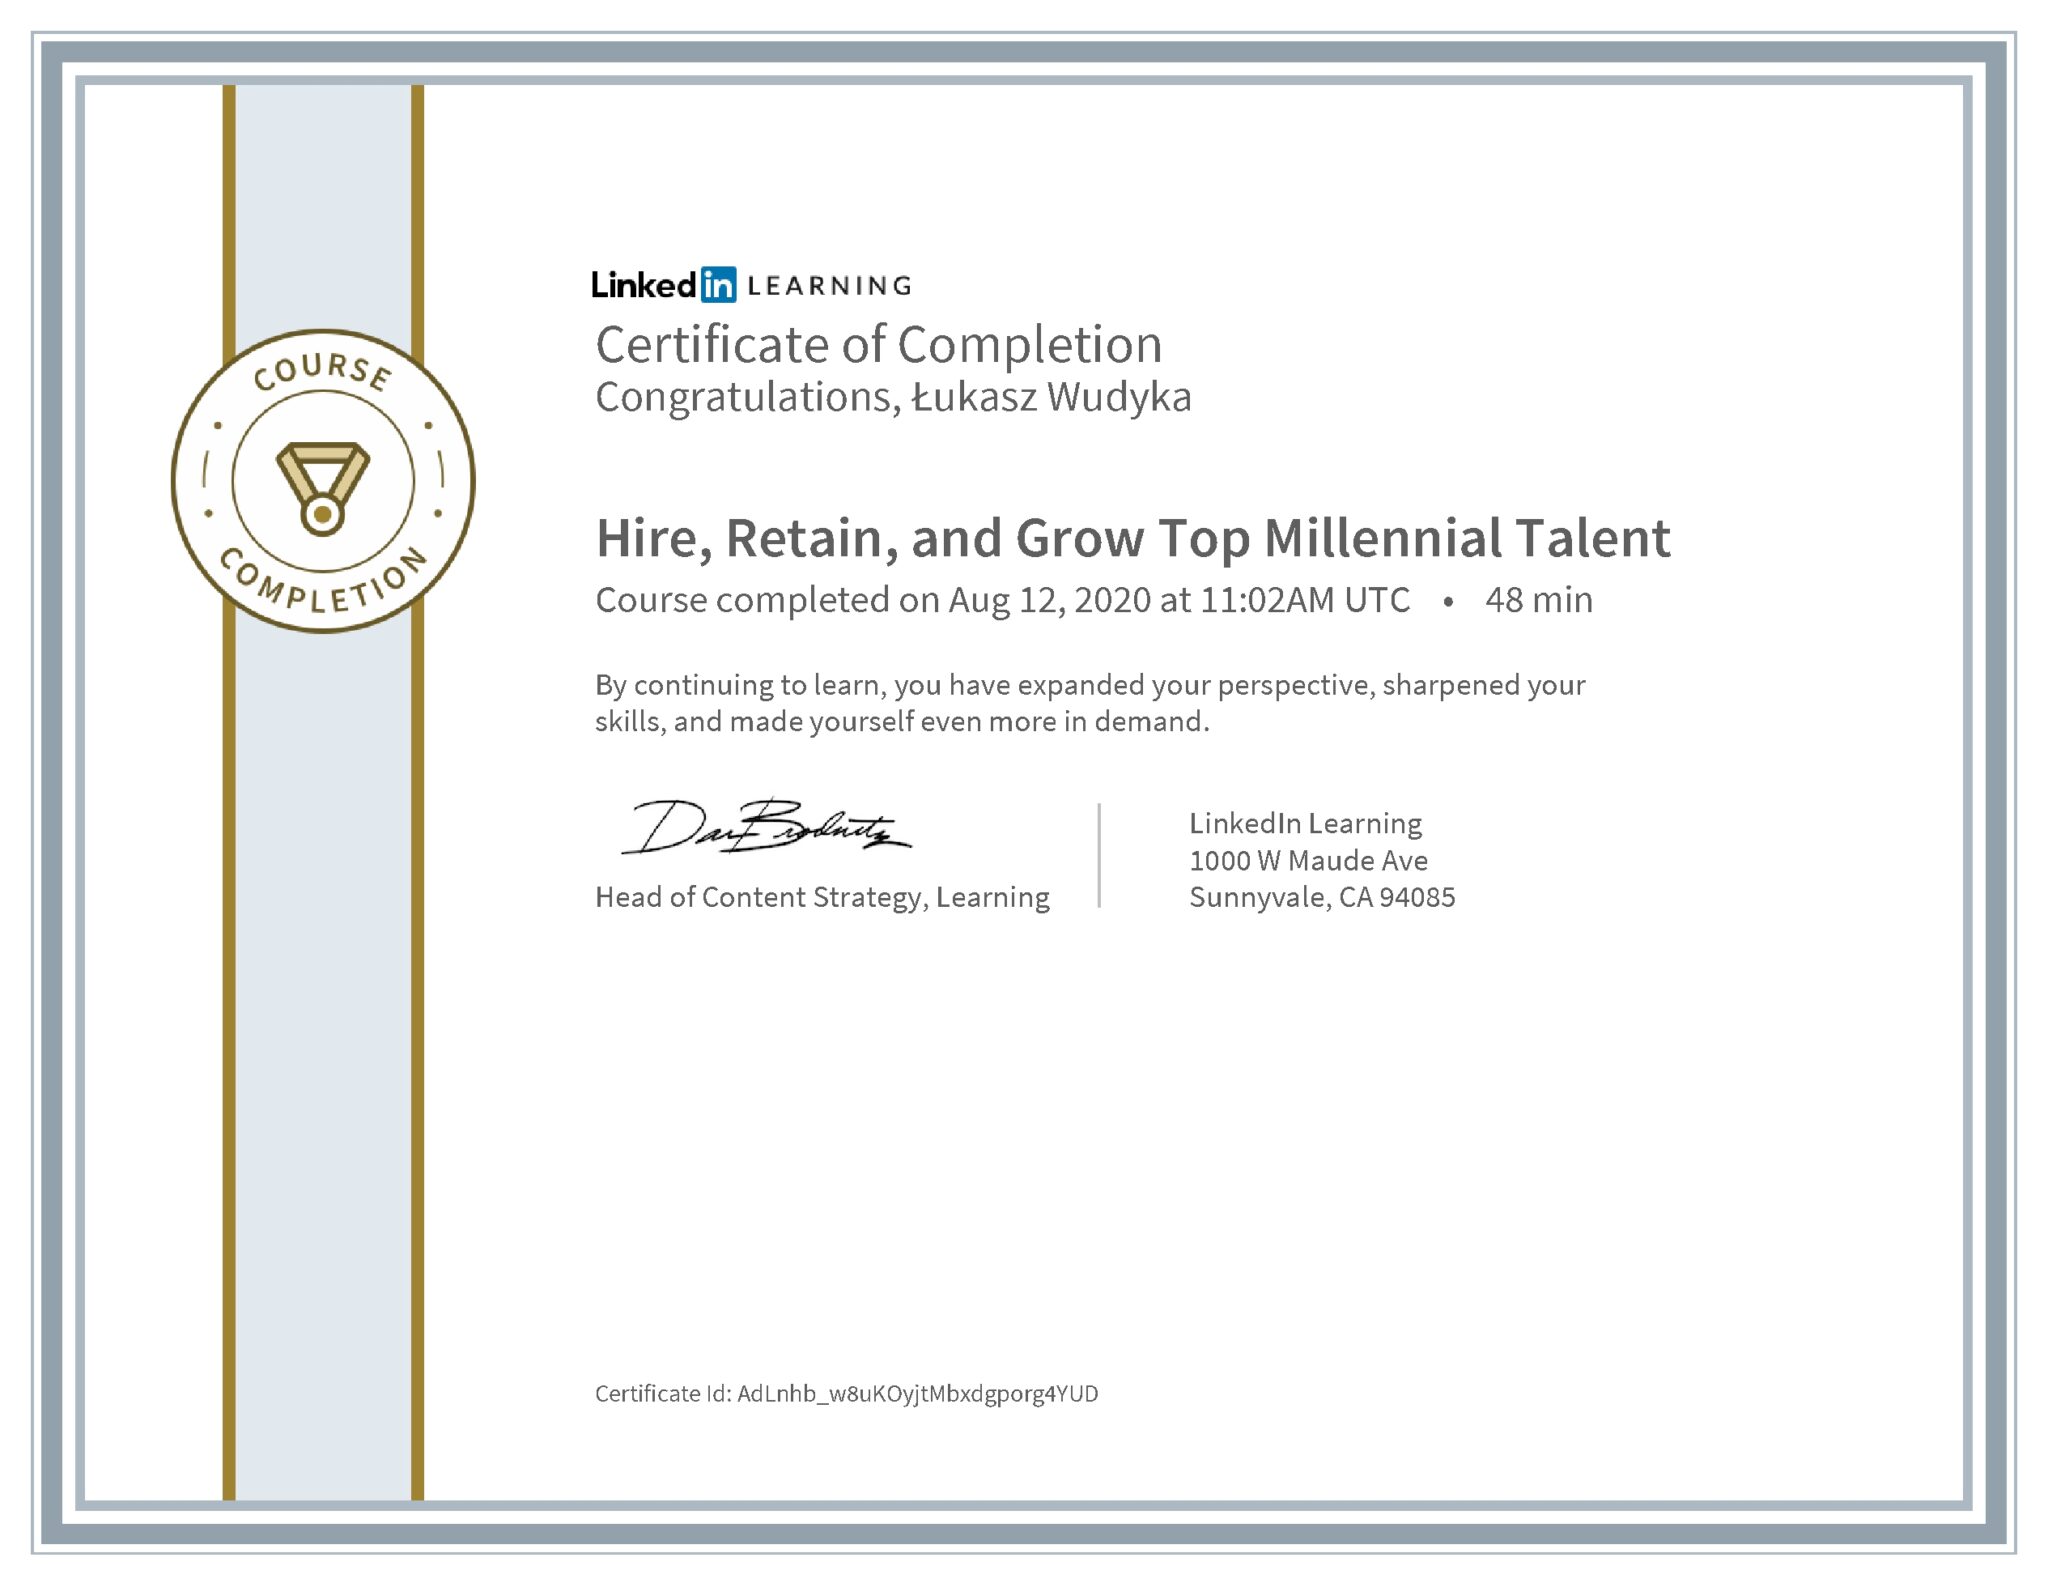 Łukasz Wudyka certyfikat LinkedIn Hire, Retain, and Grow Top Millennial Talent